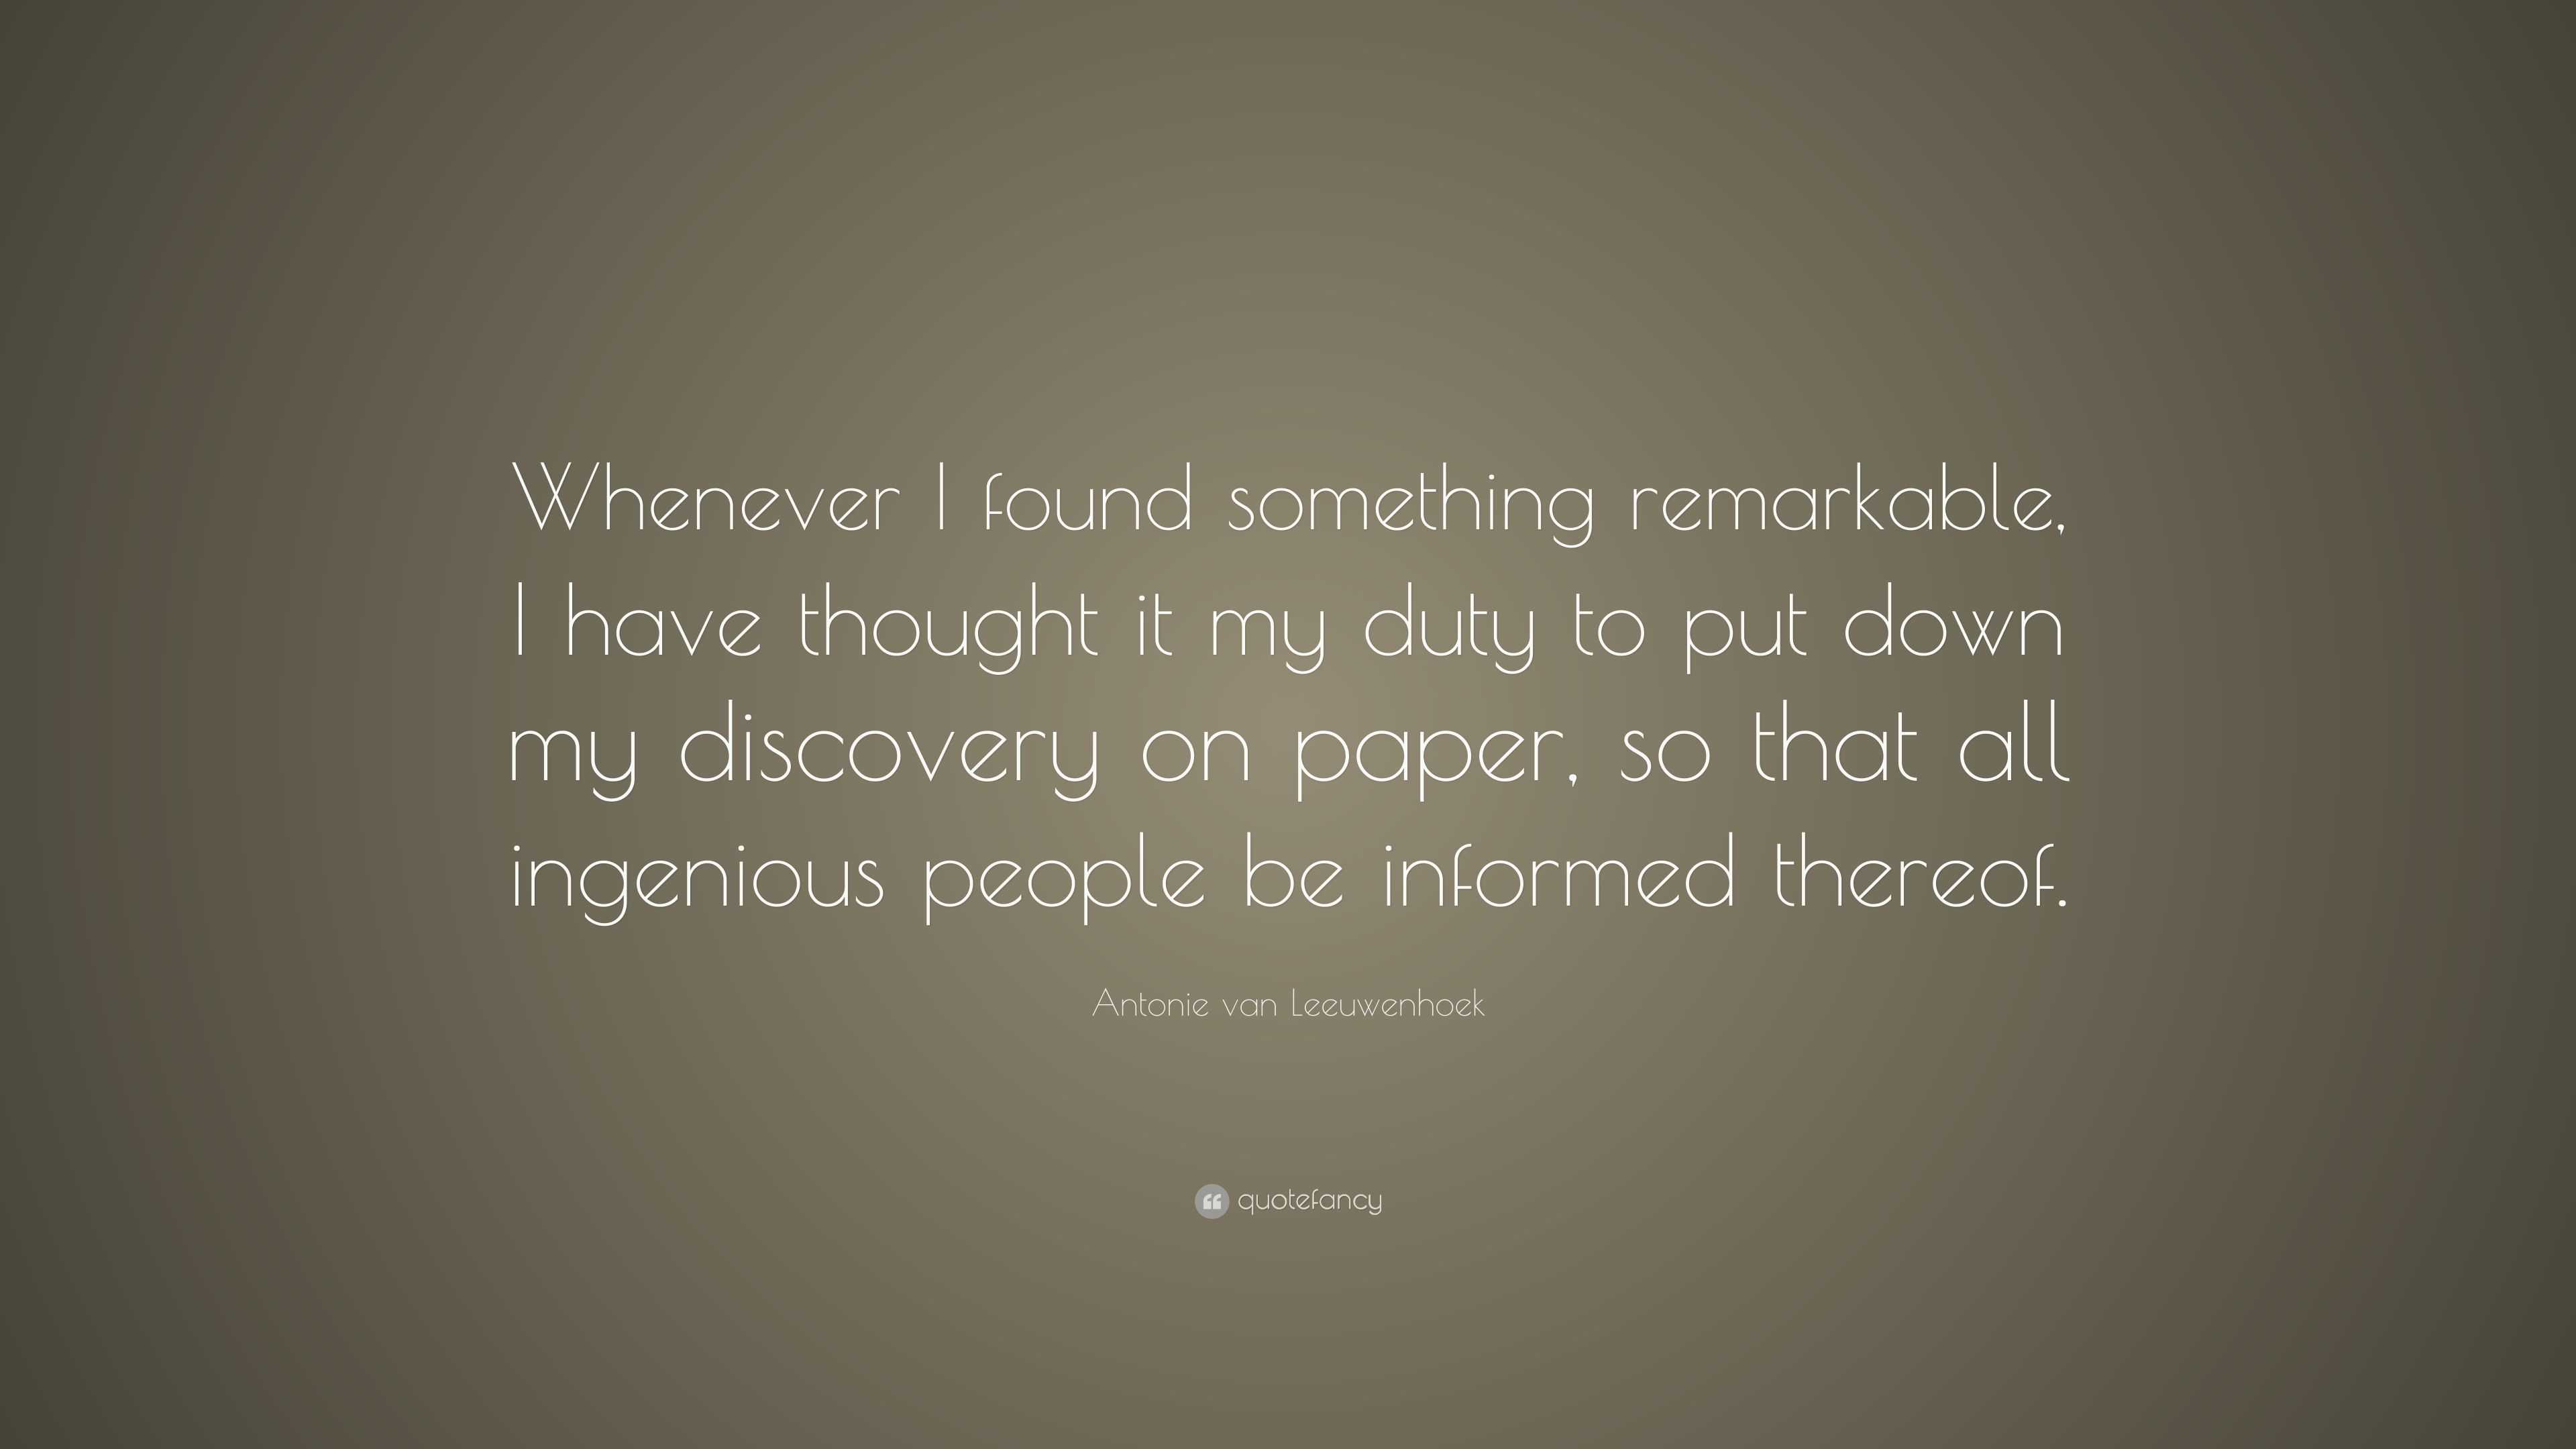 Antonie van Leeuwenhoek Quote: “Whenever I found something remarkable ...